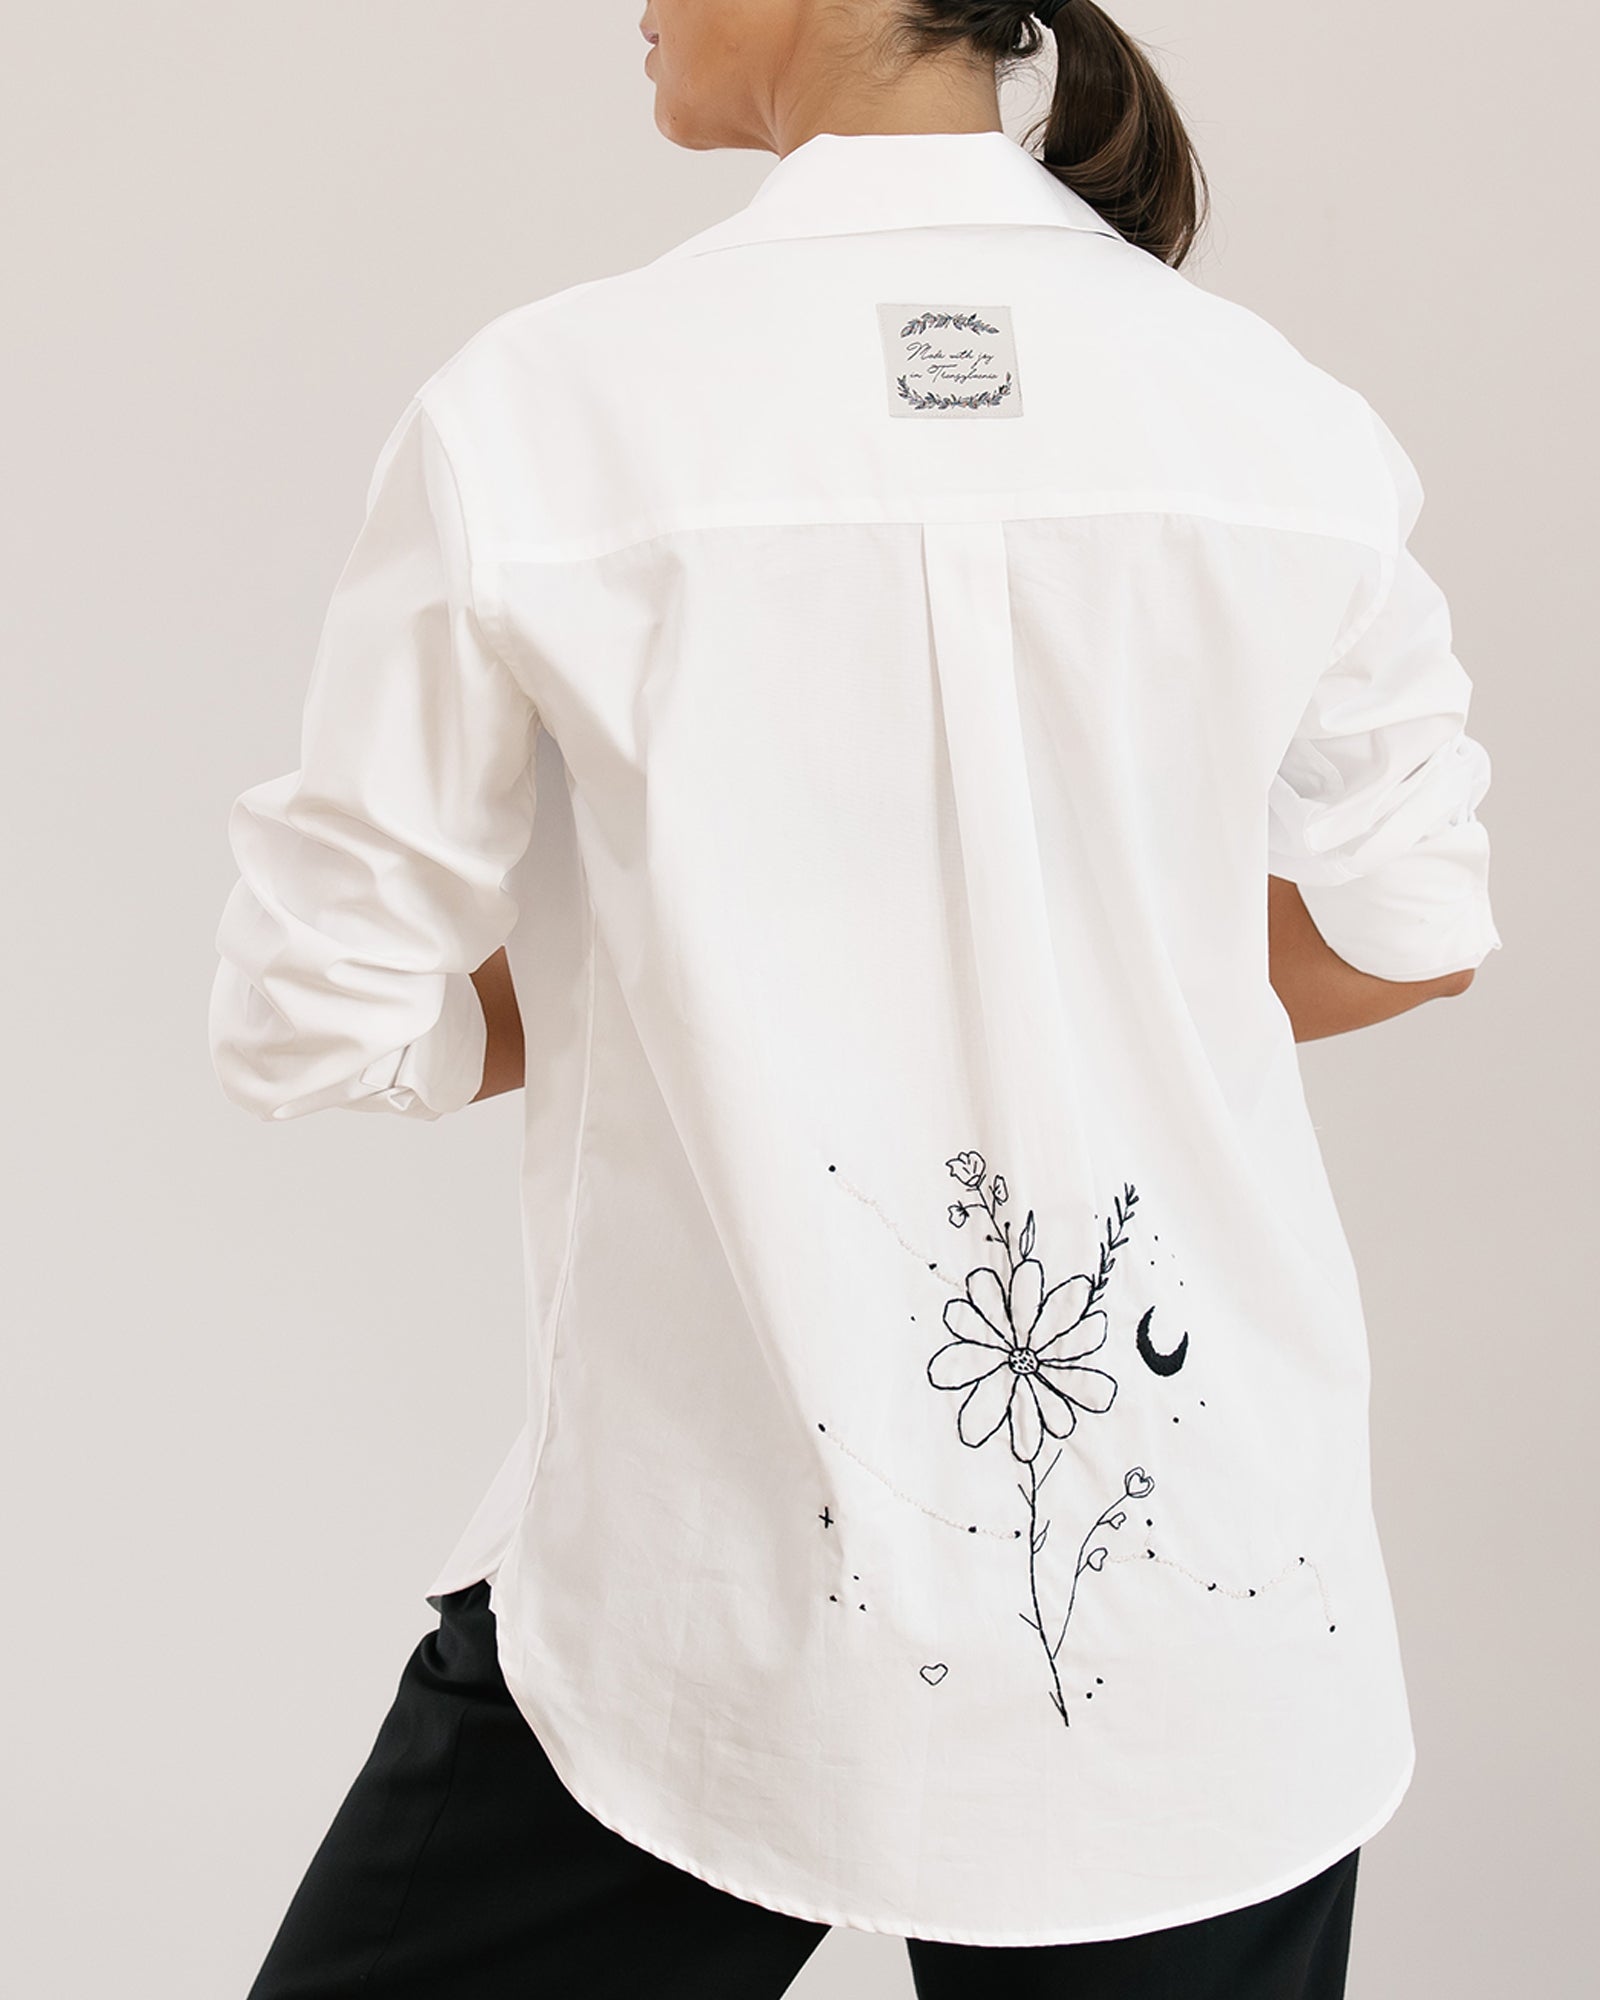 Women's hand-embroidered shirt "Art Lines"